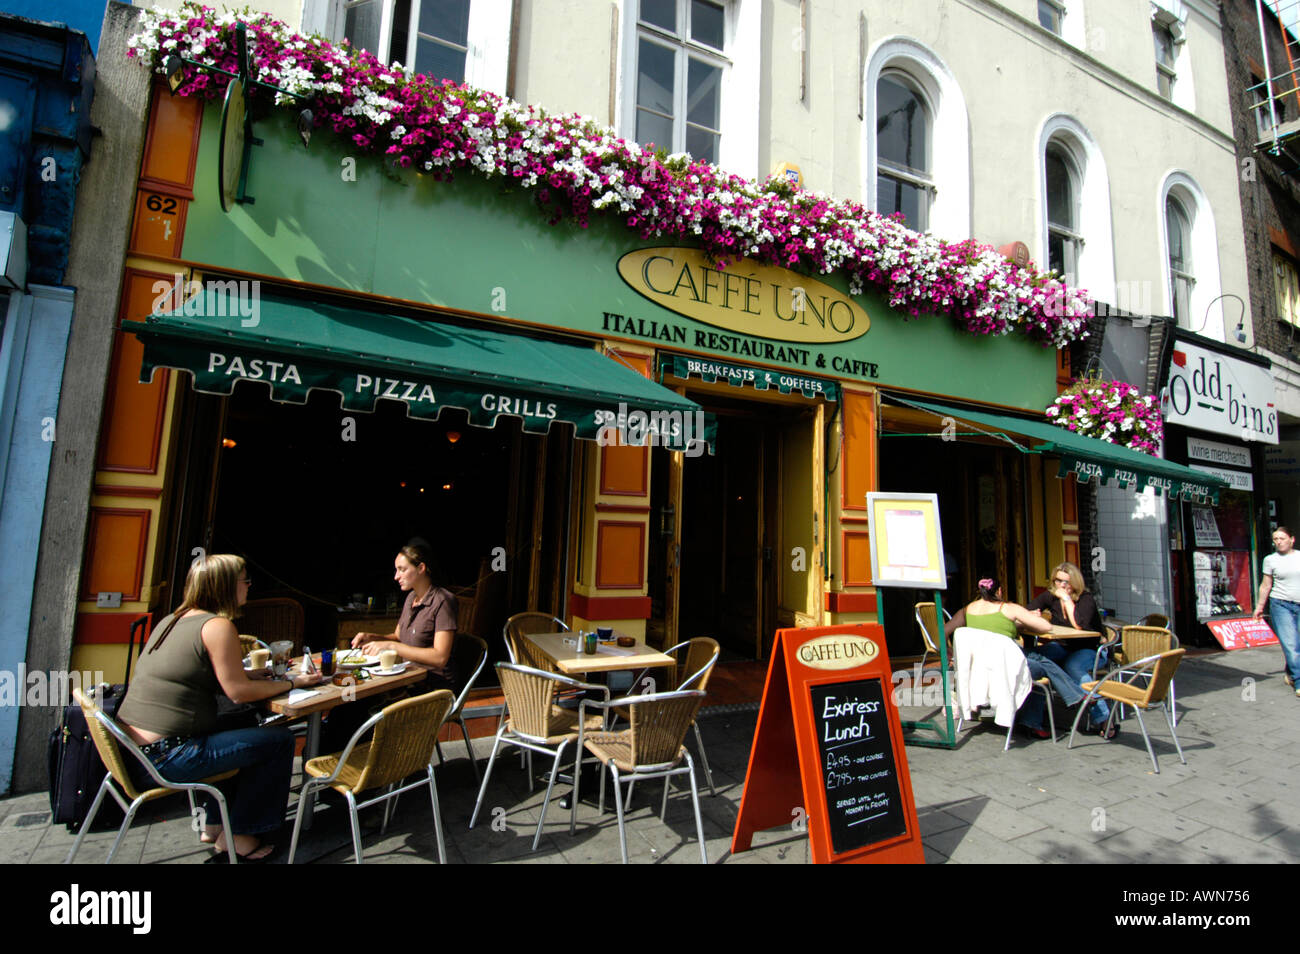 Caffe Uno, Upper Street, Islington London England Britain UK Stock Photo -  Alamy